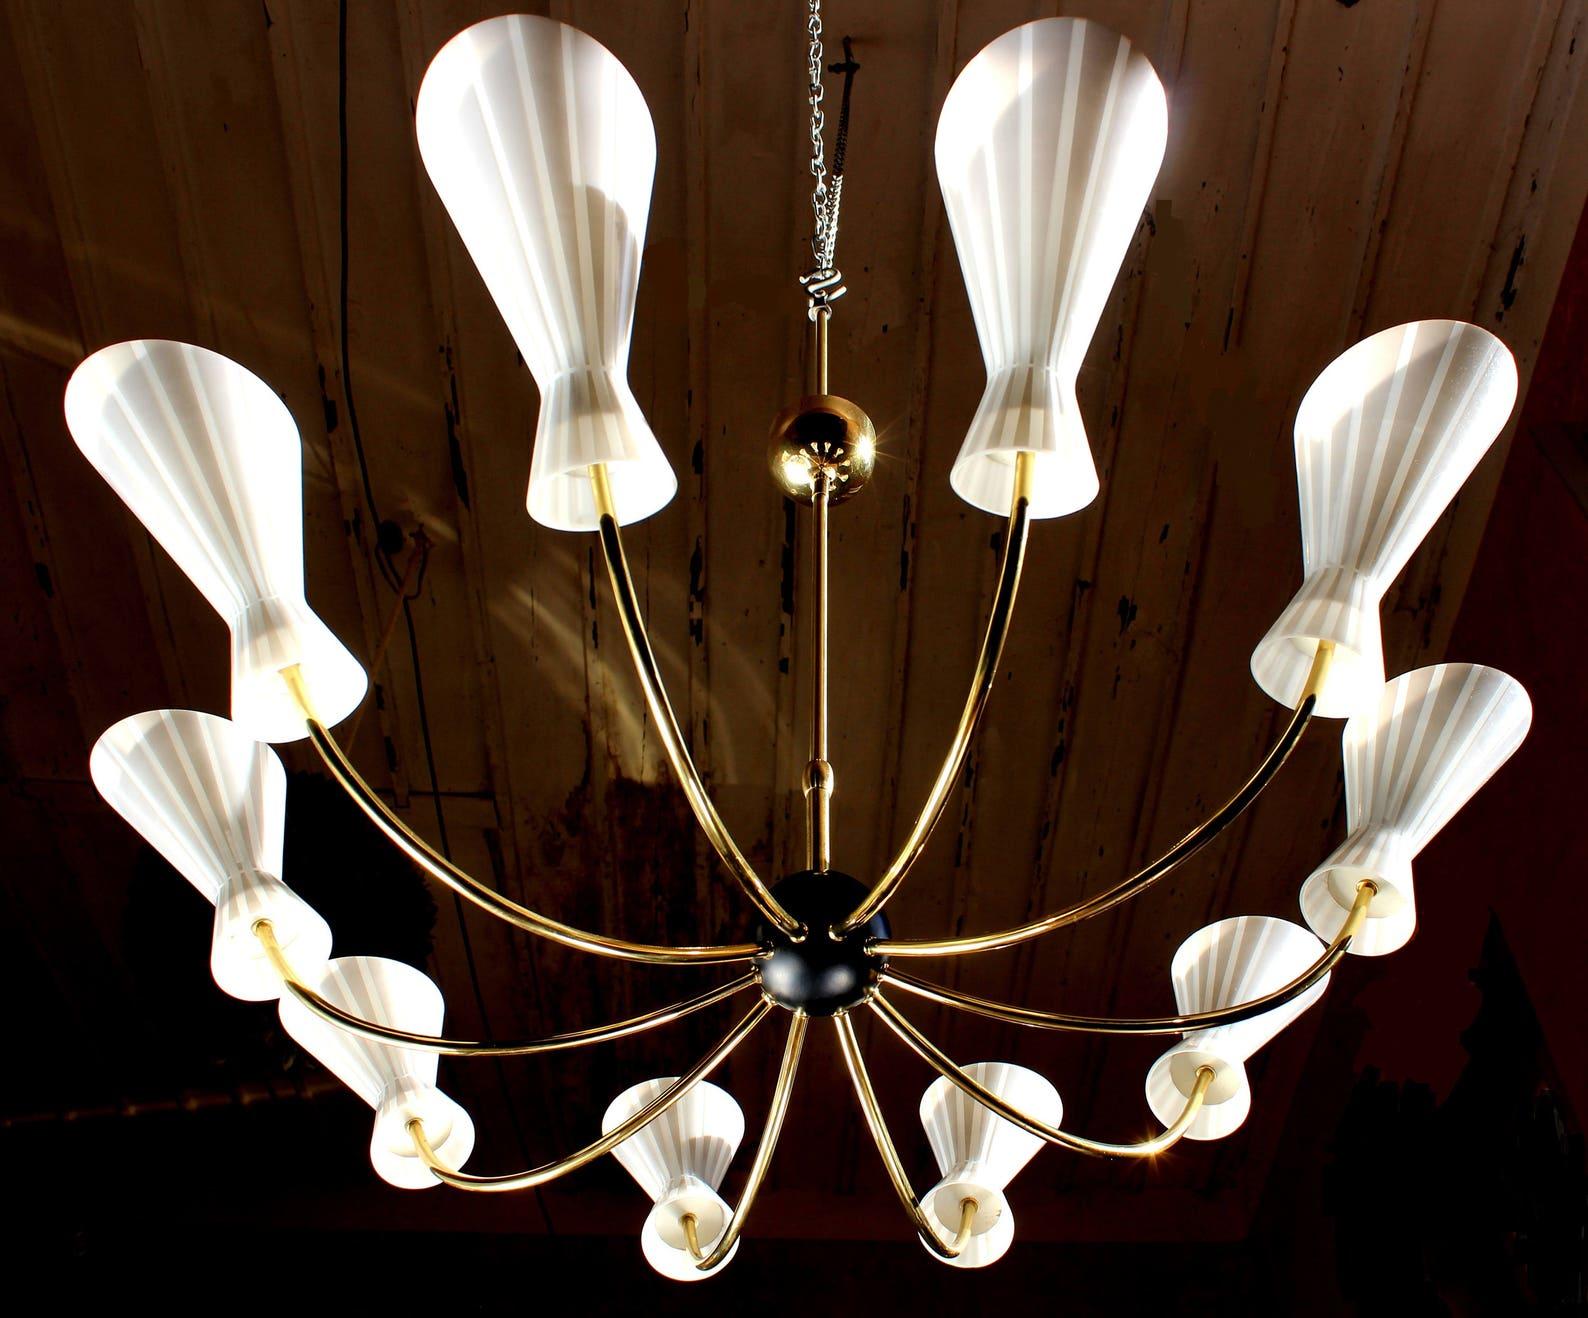 10 Lights diabolo spider chandelier Milano 1950s stilnovo type.
Brass & double cone art glass shades in grey/ white.

Measures: diameter 30